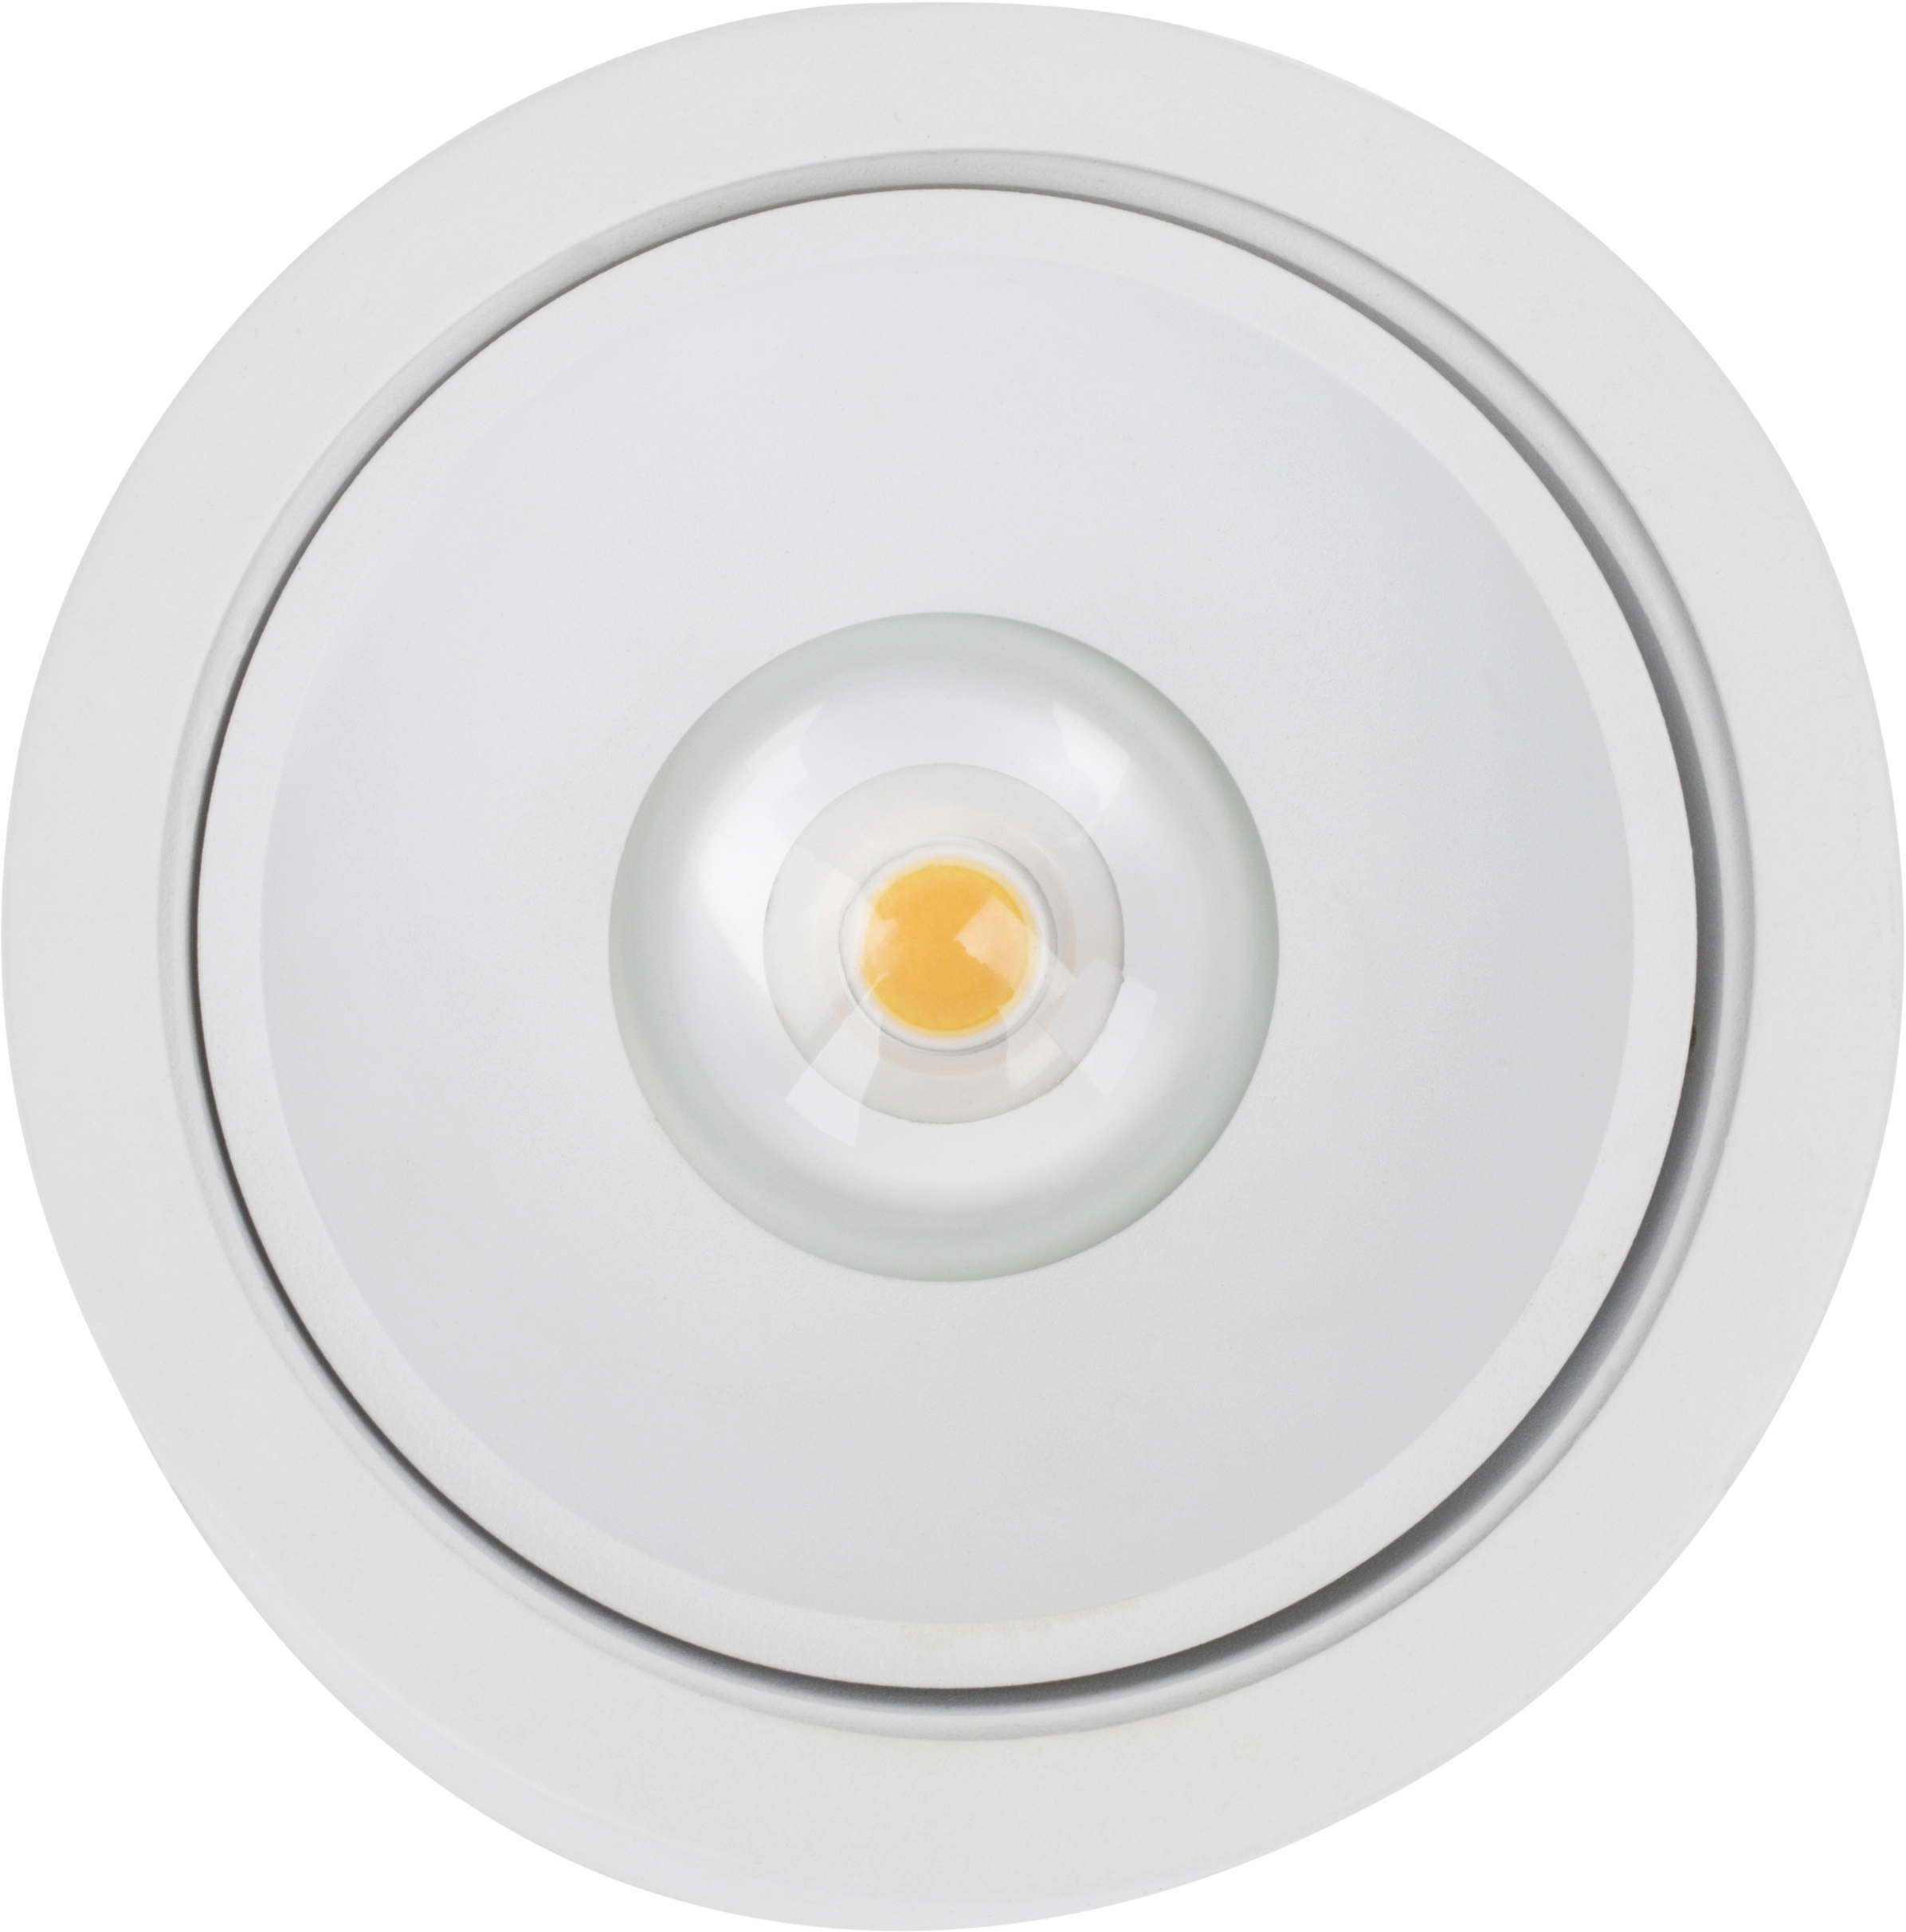 OBI dimmbar LED-Spot bei Leca kaufen 12,8 cm x schwenkbar AEG cm und 9 Ø